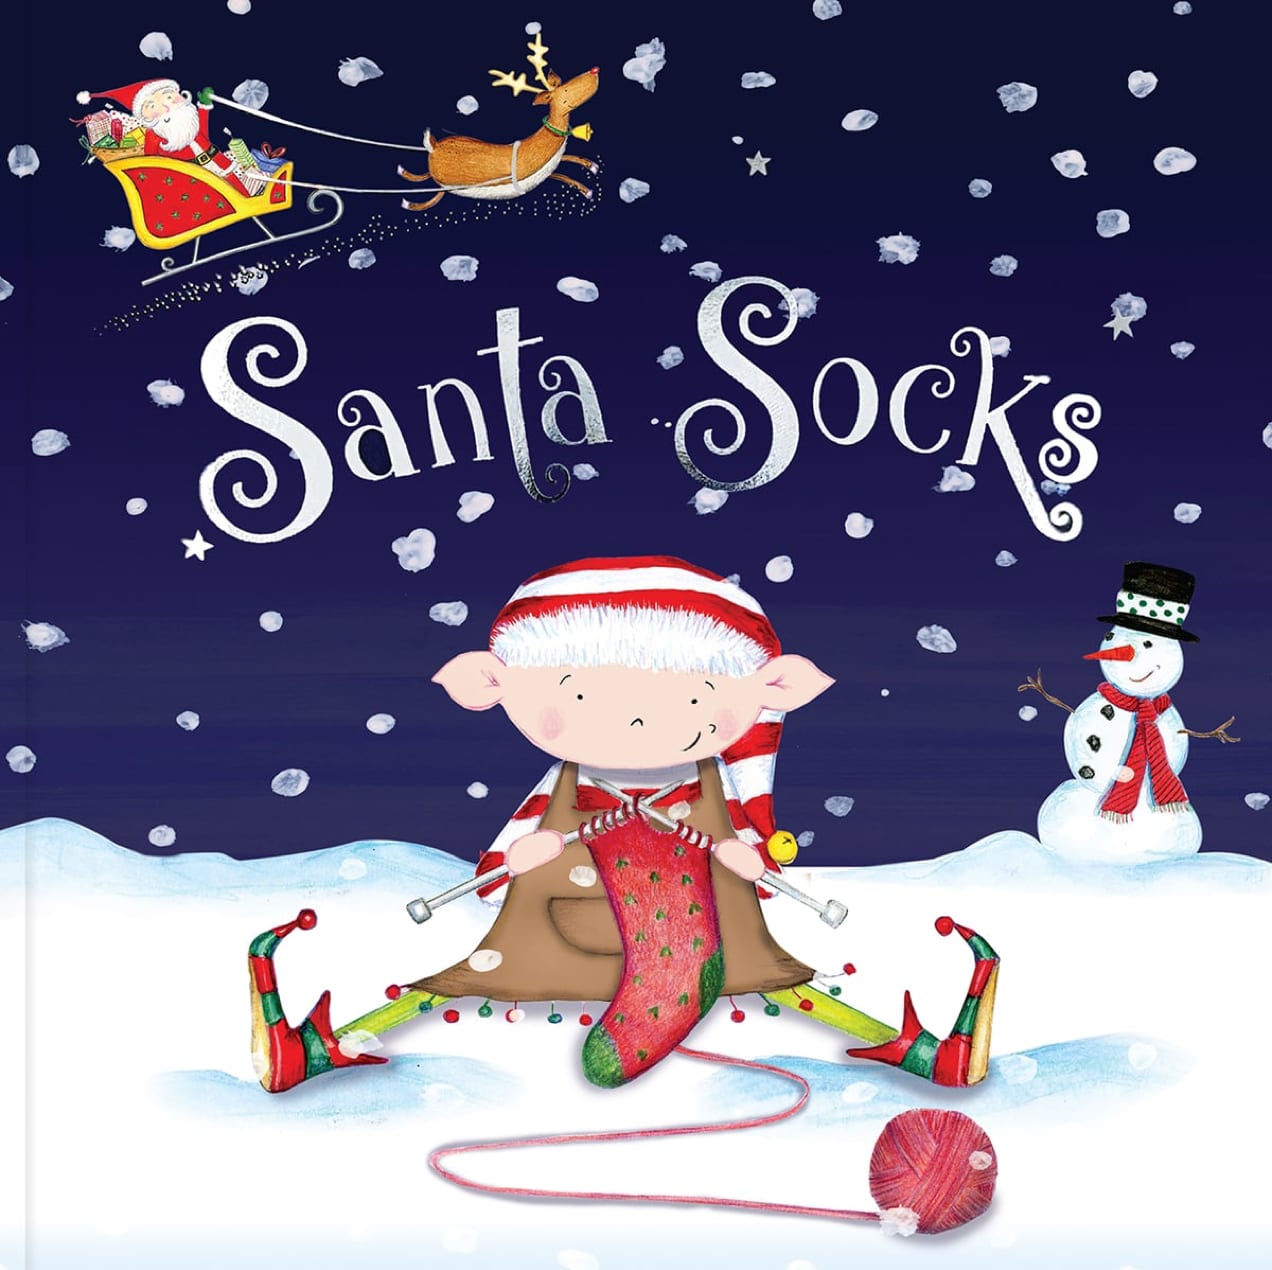 Santa Socks book with an elf knitting a stocking